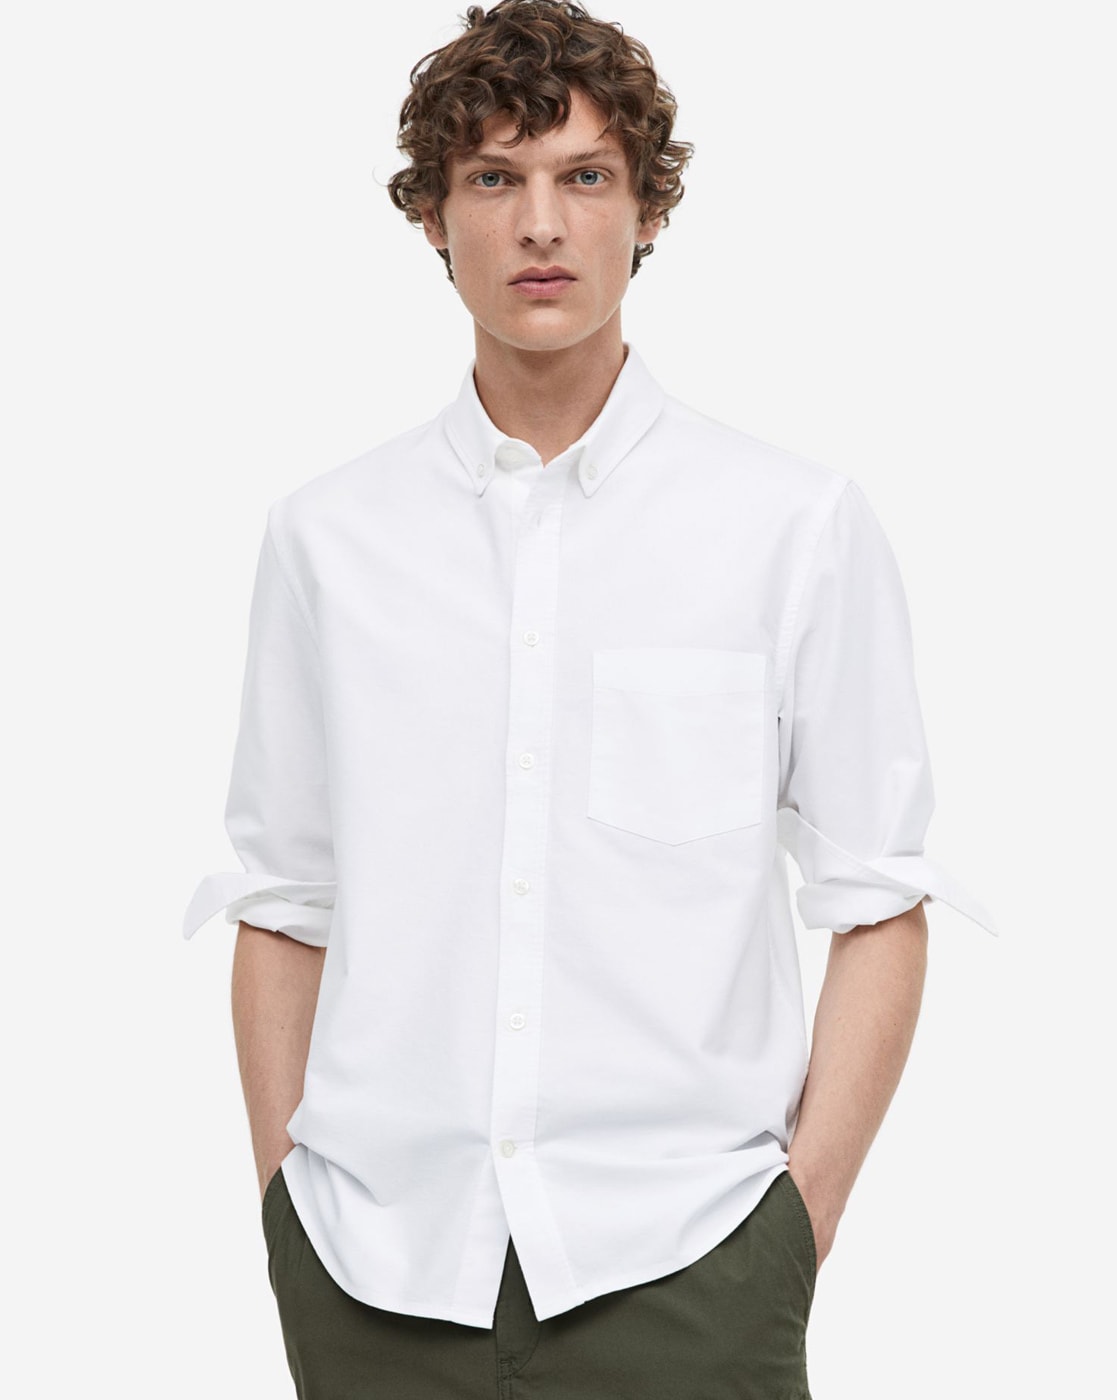 Full-Sleeve Casual Shirt